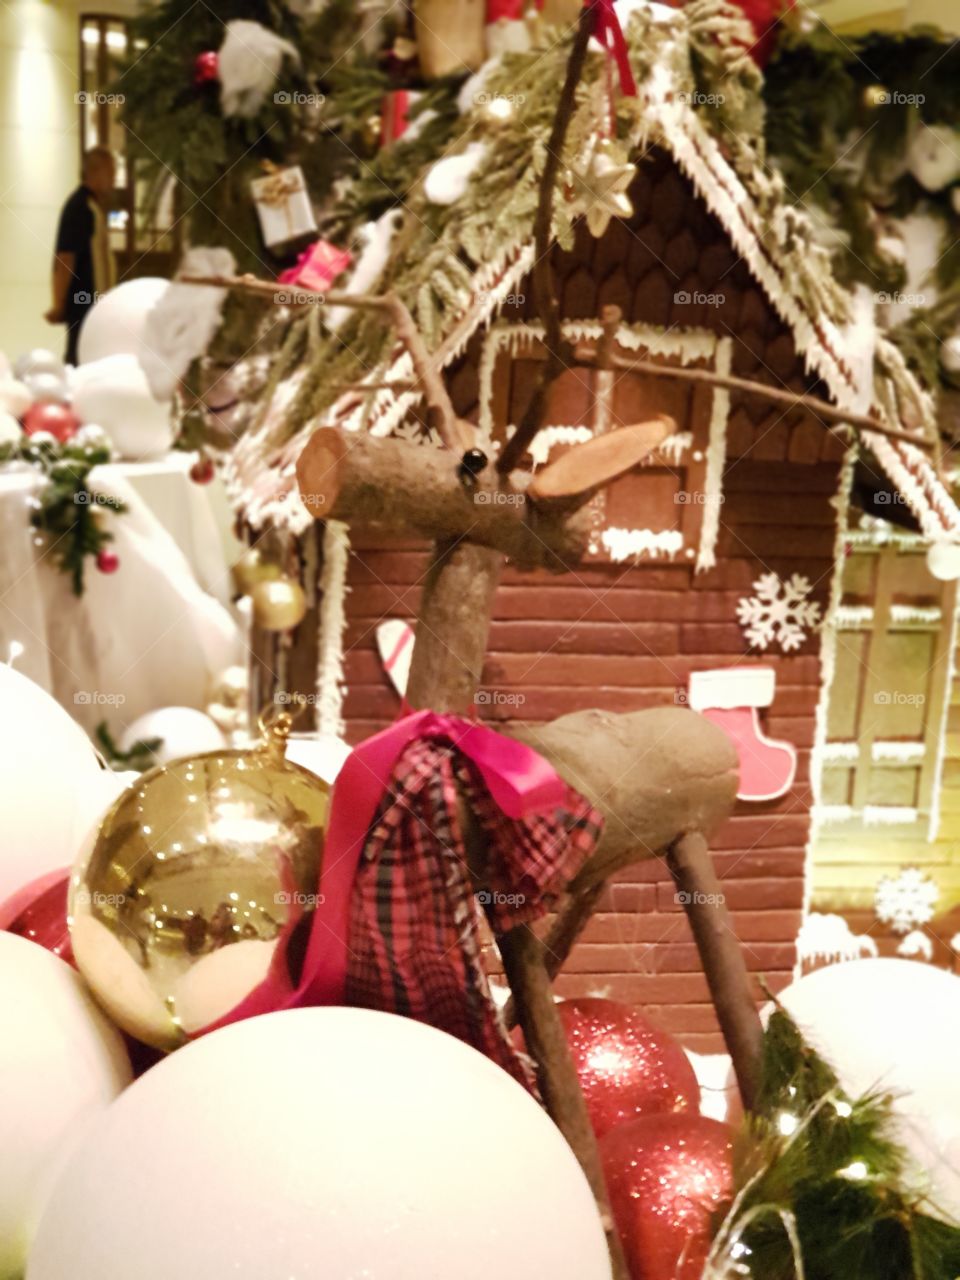 A deer Christmas decoration